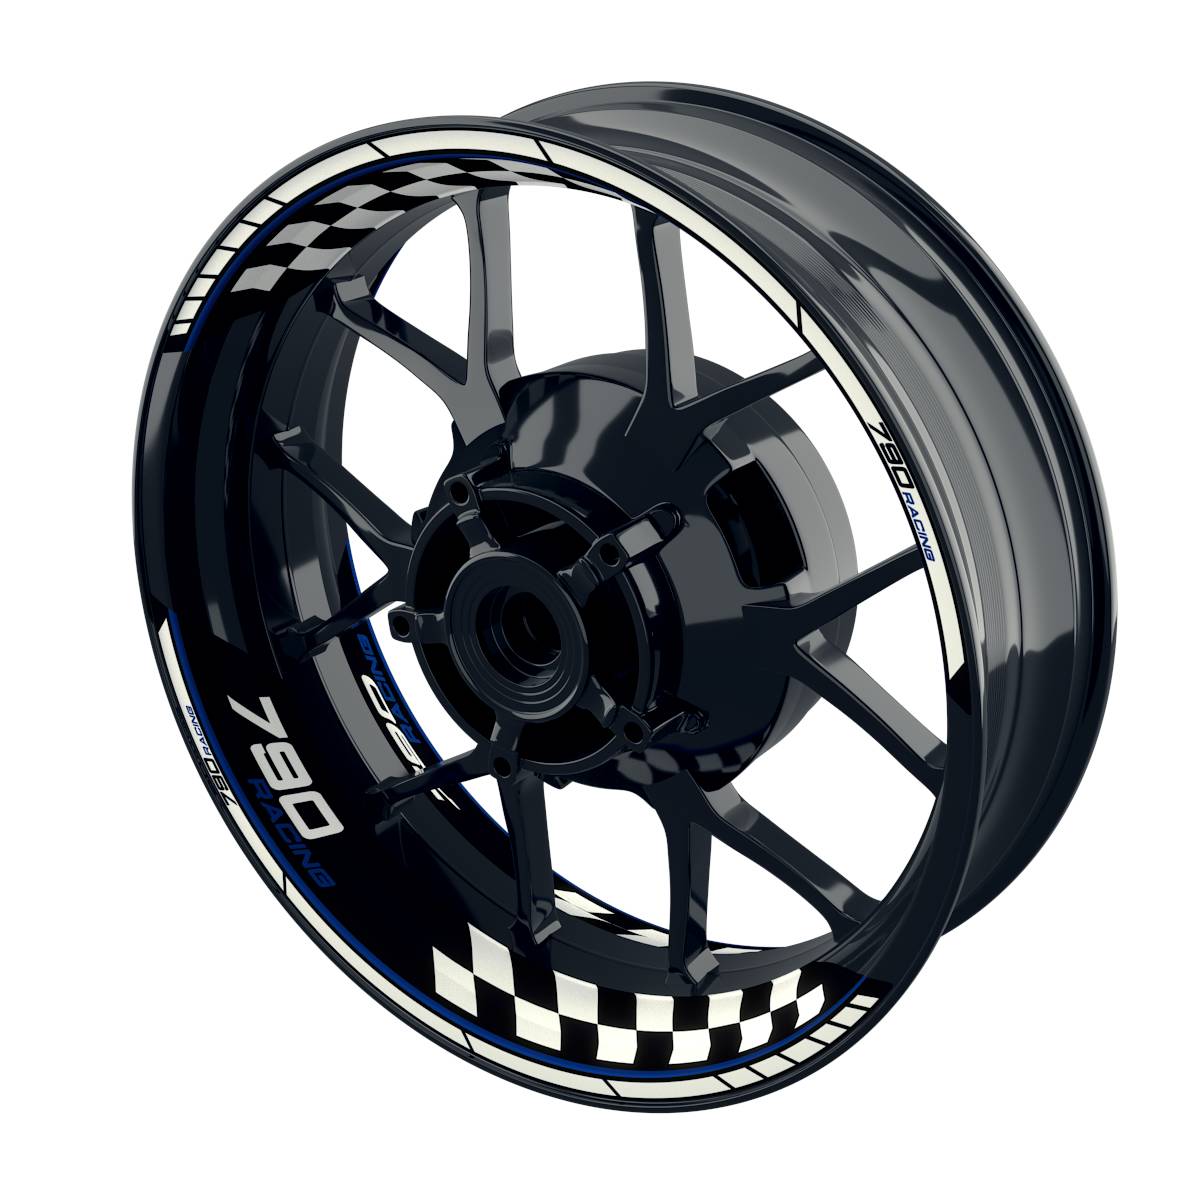 Racing 790 Grid Rim Decals Wheelsticker Premium splitted